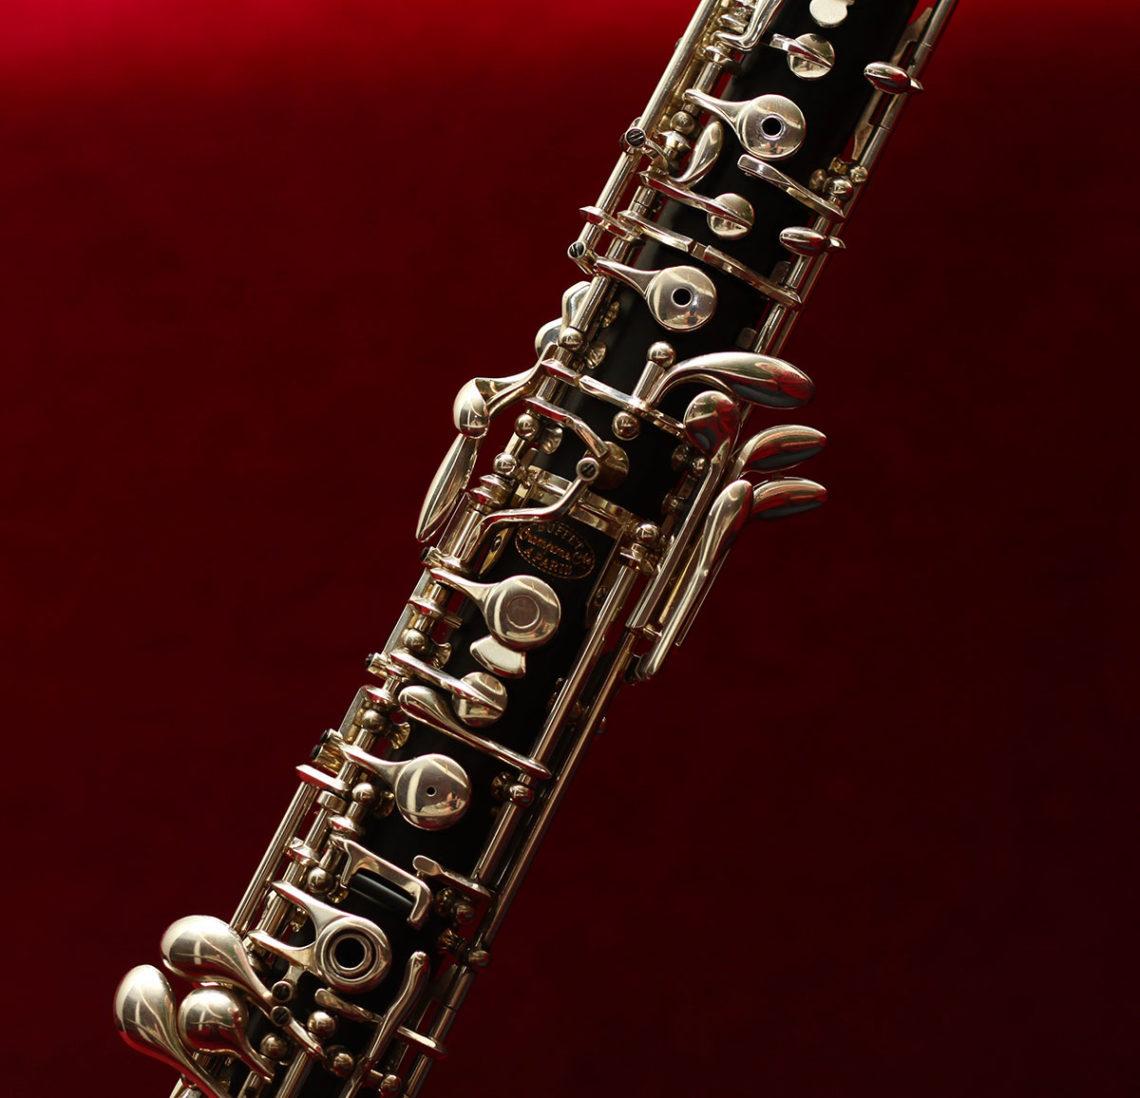 oboe